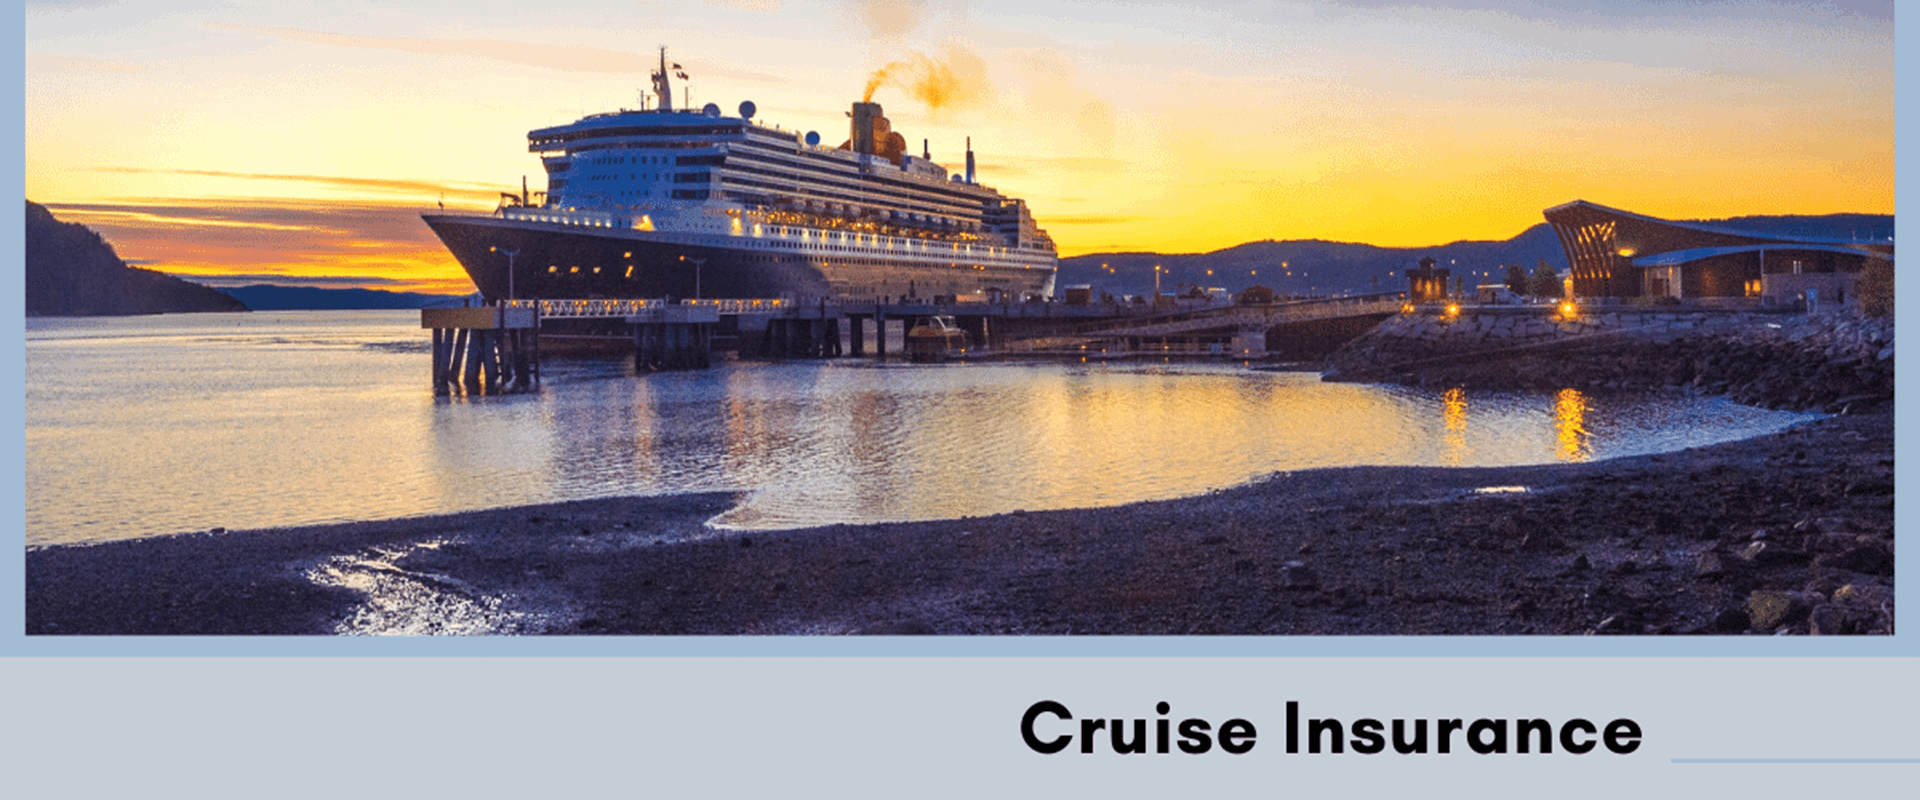 Traditional Travel Insurance vs Cruise Insurance